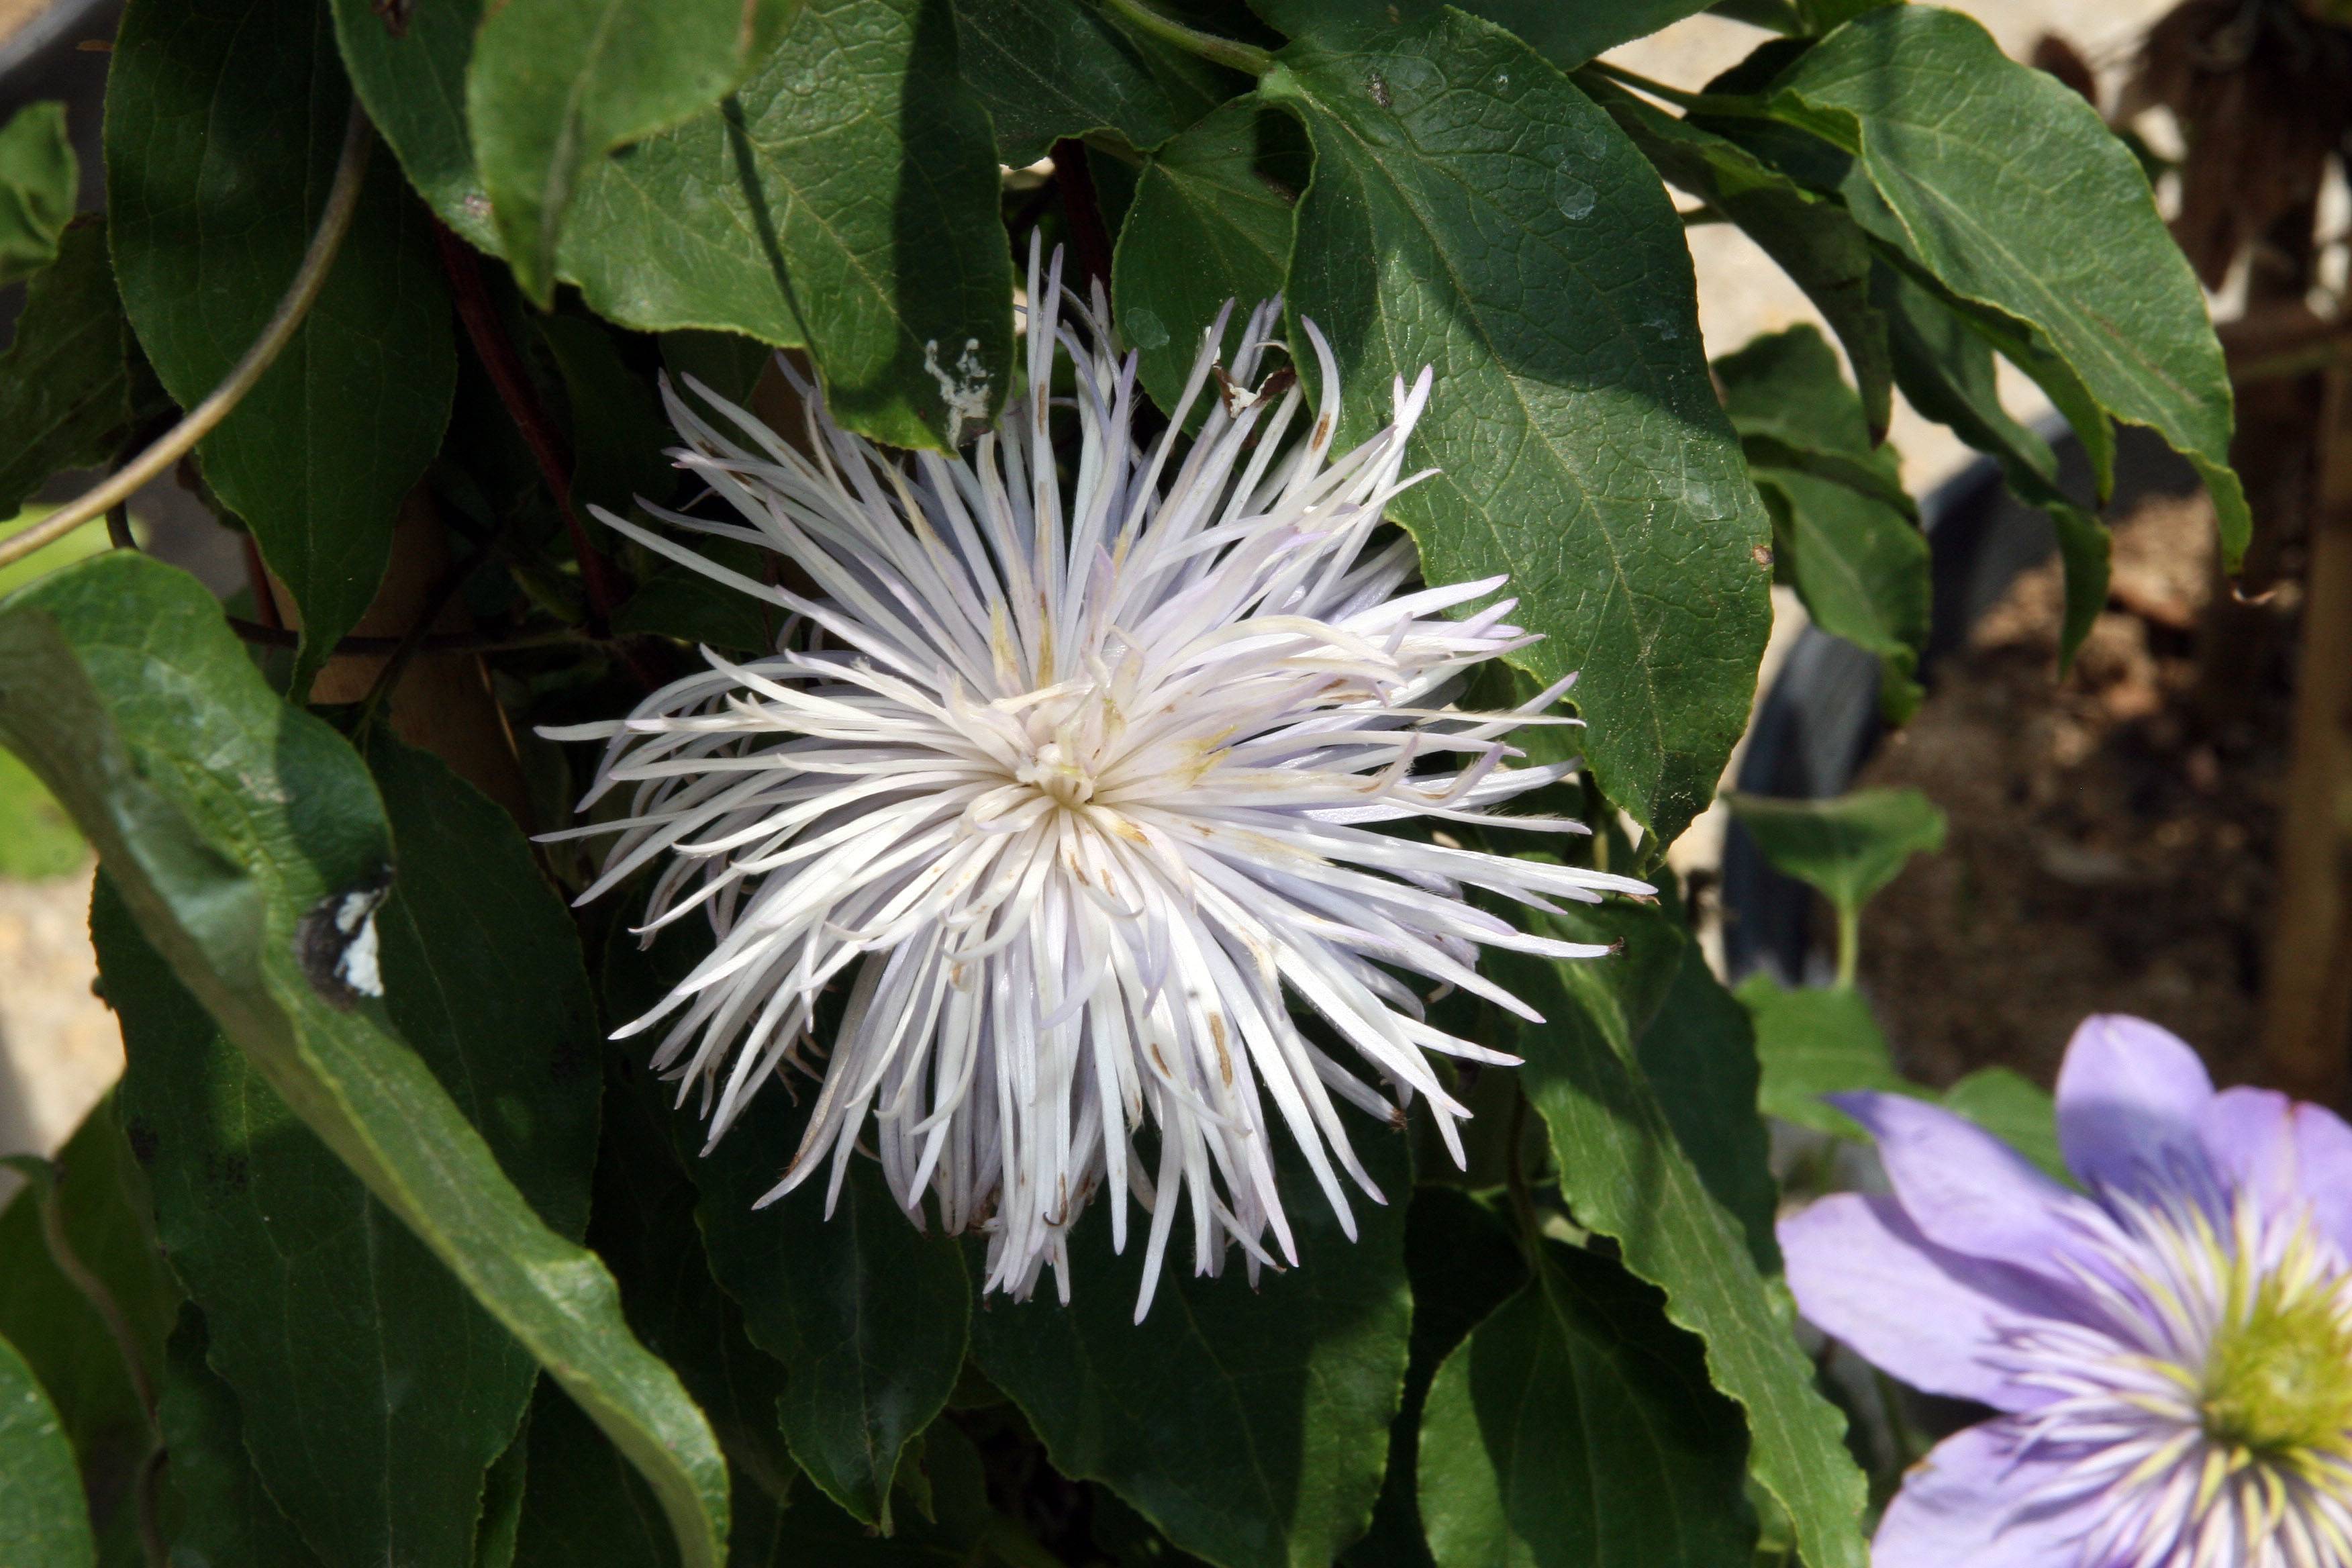 white, pom-pom-like flower with dark-green, shiny, ovate leaves